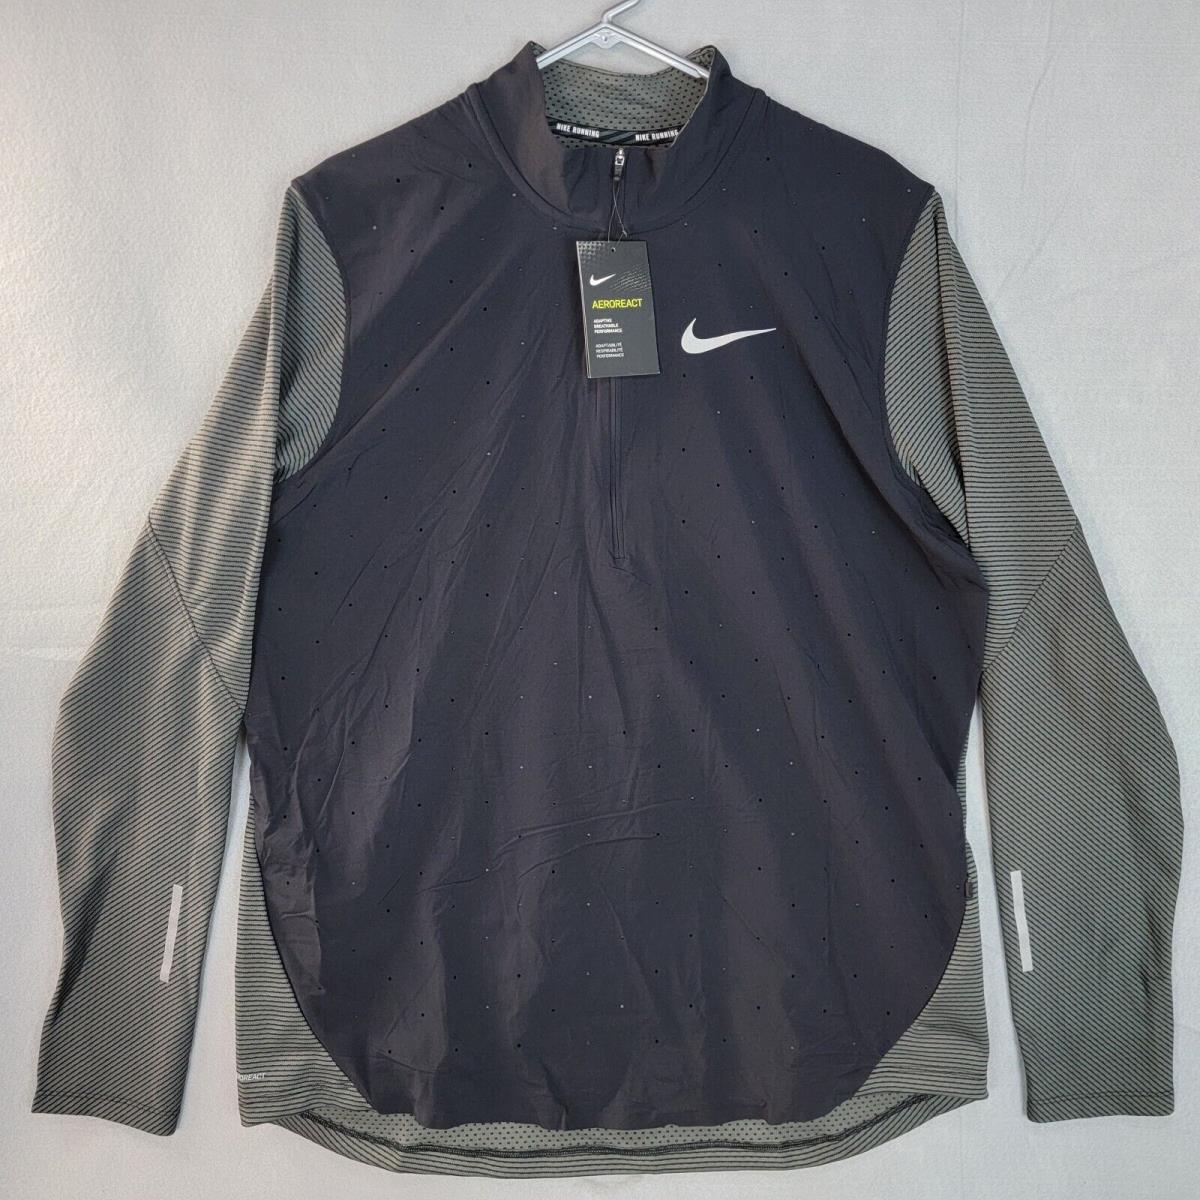 Nike Running Aeroreact Hybrid Half Zip Long Sleeve Top Shirt Black Grey Mens XL